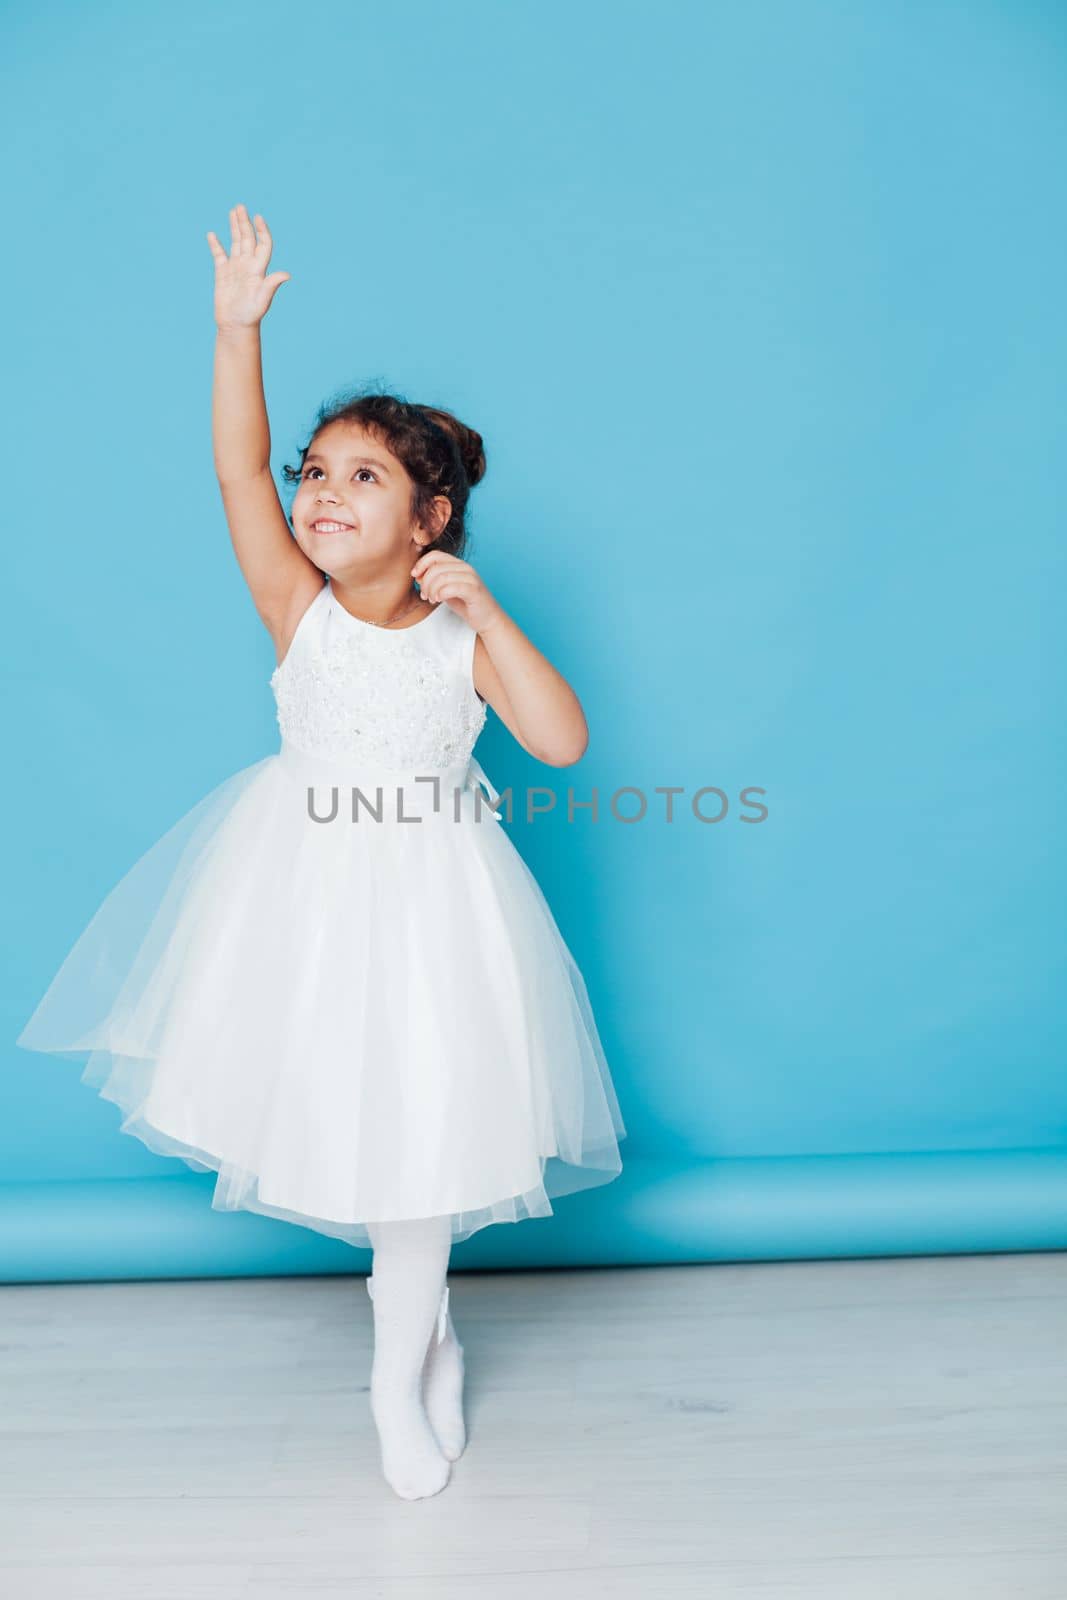 little girl in white dress ballerina dancing on a blue background by Simakov